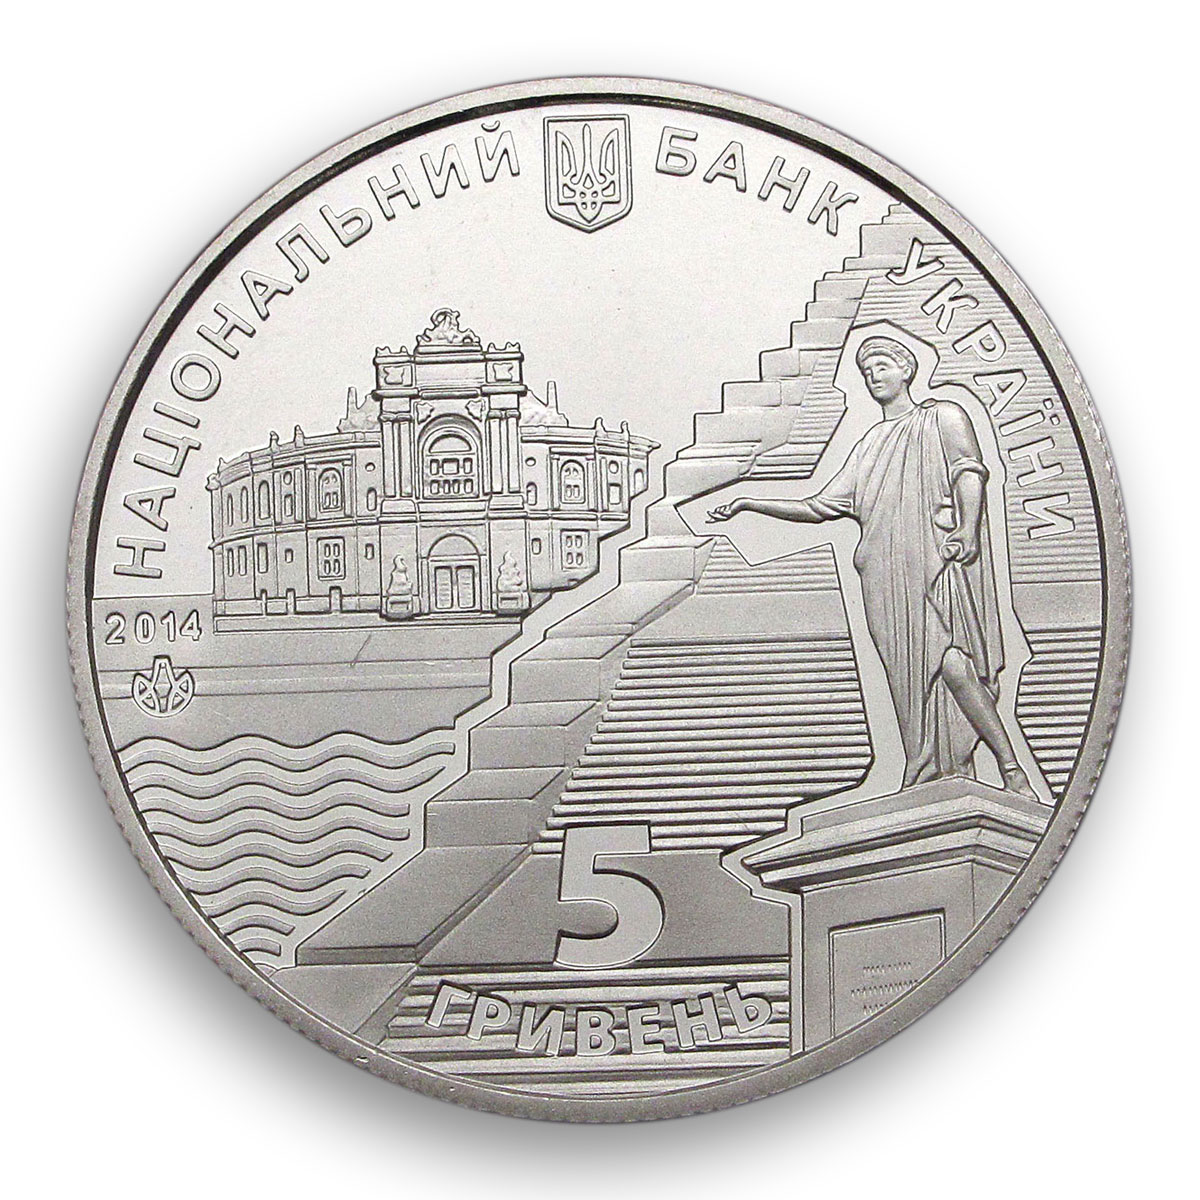 Ukraine 5 hryvnia 220 years of Odessa hero city Black sea ship nickel coin 2014